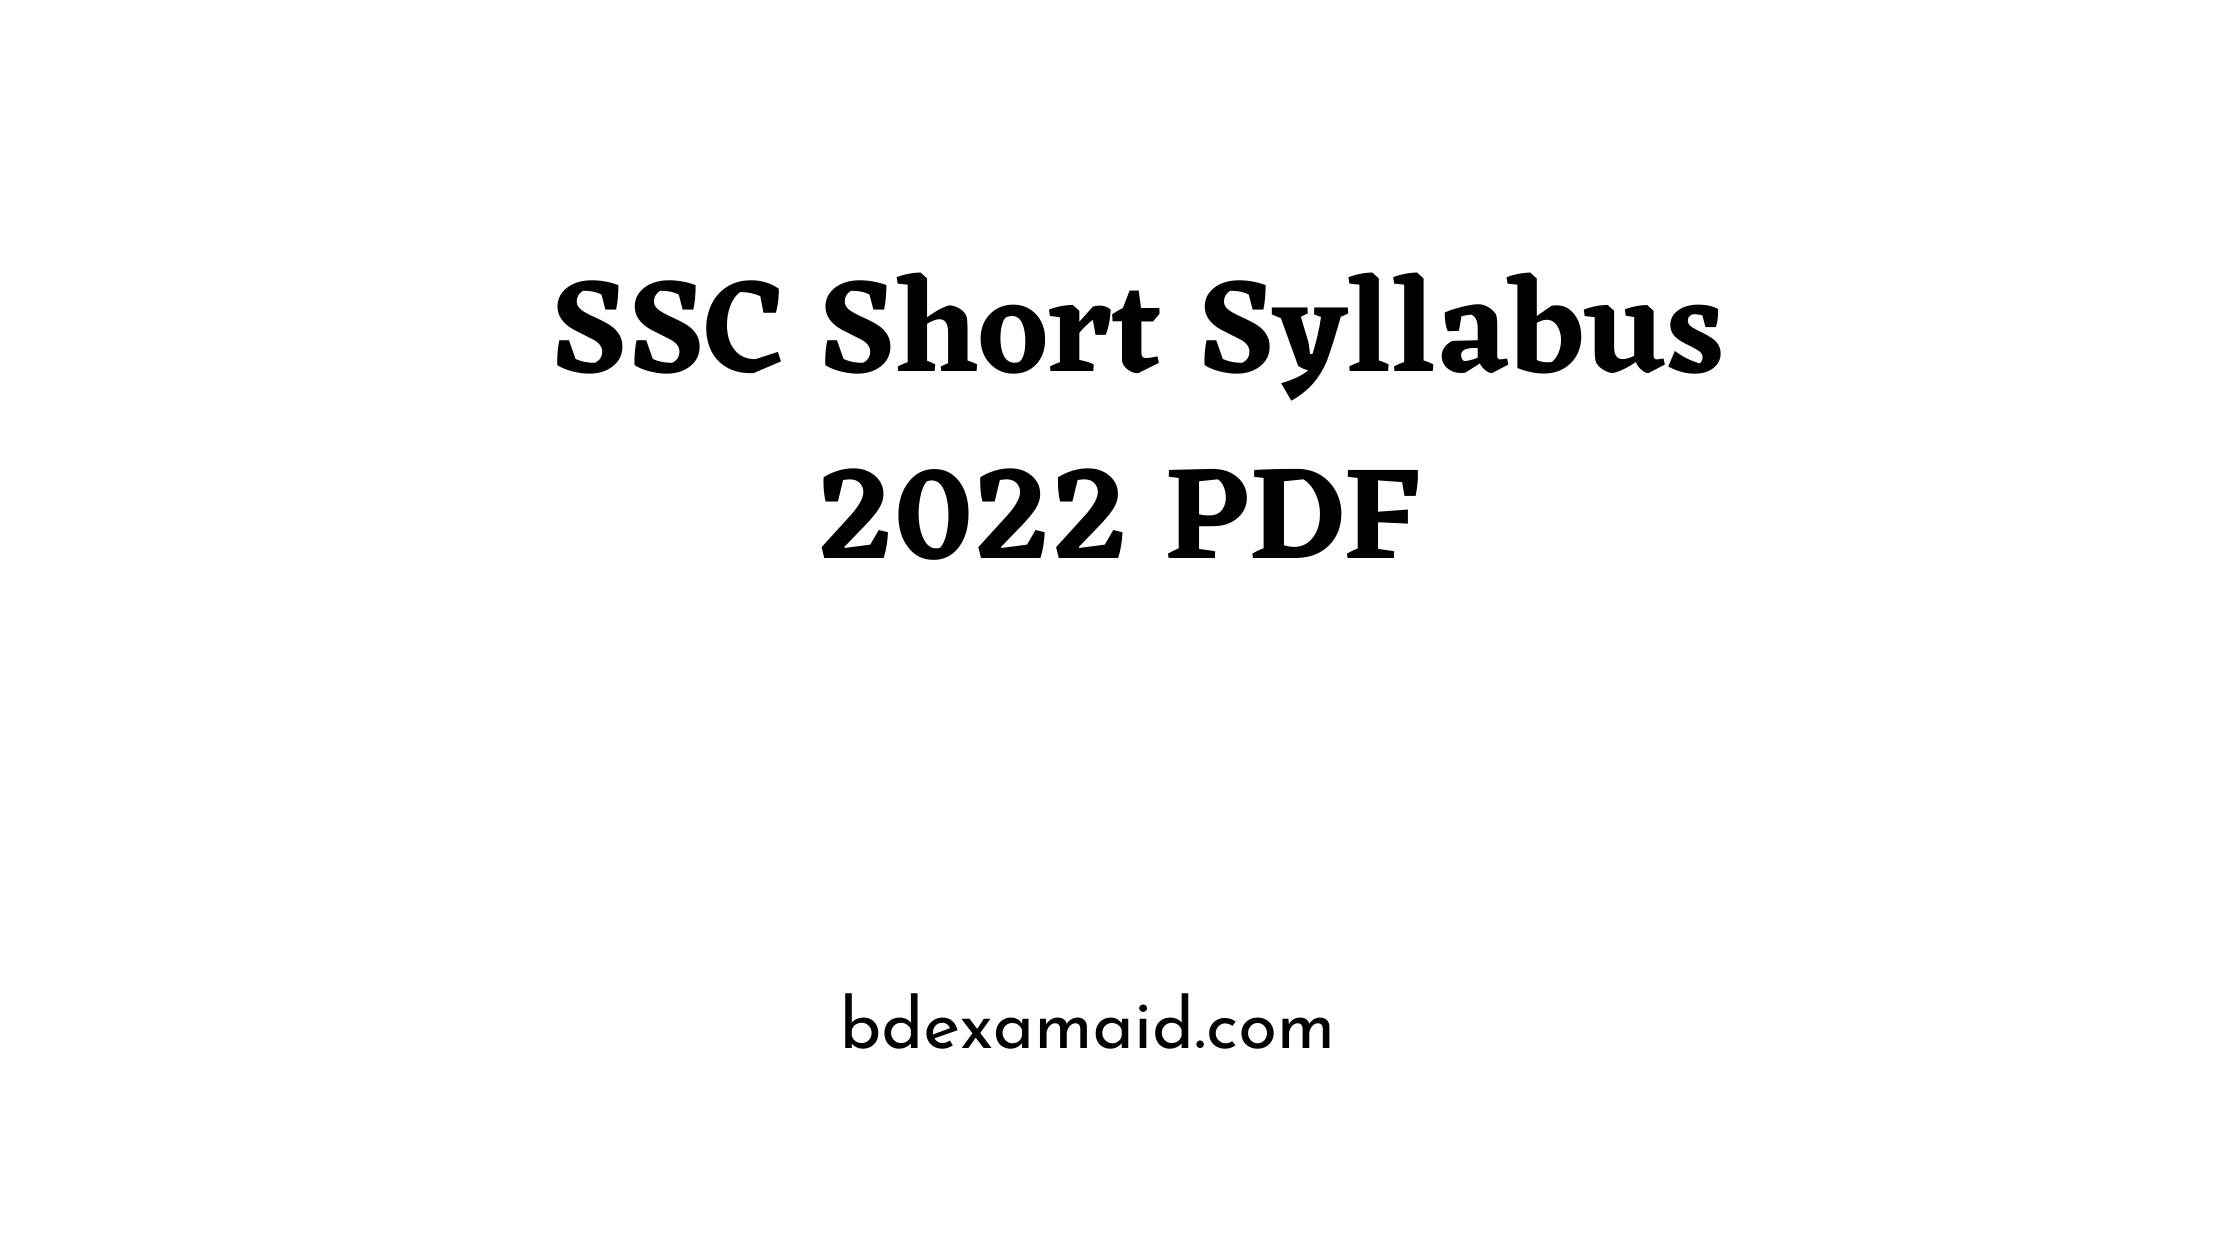 sssc short syllabus 2022